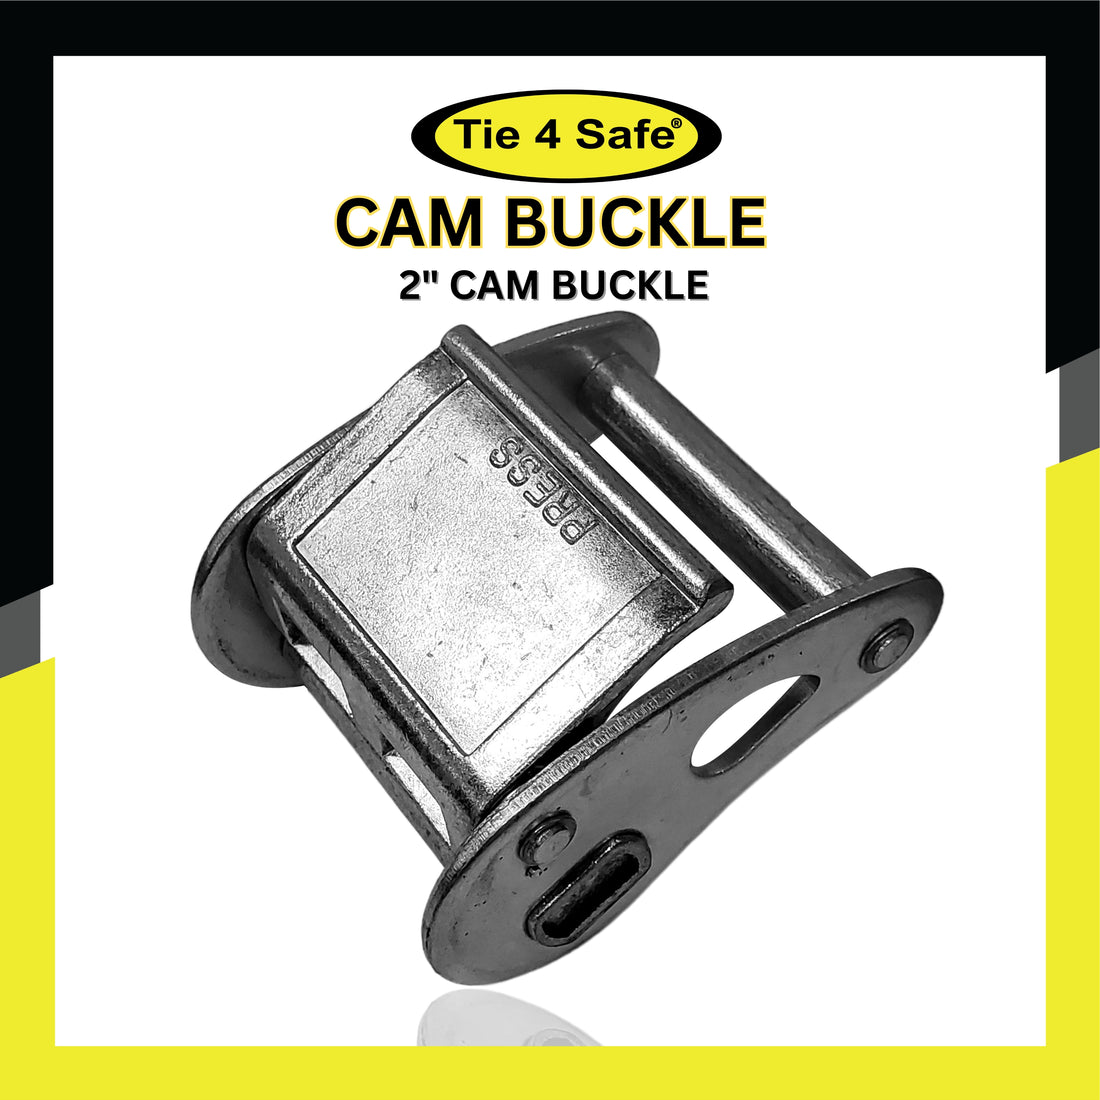 2" Cam Buckle - CB09-122